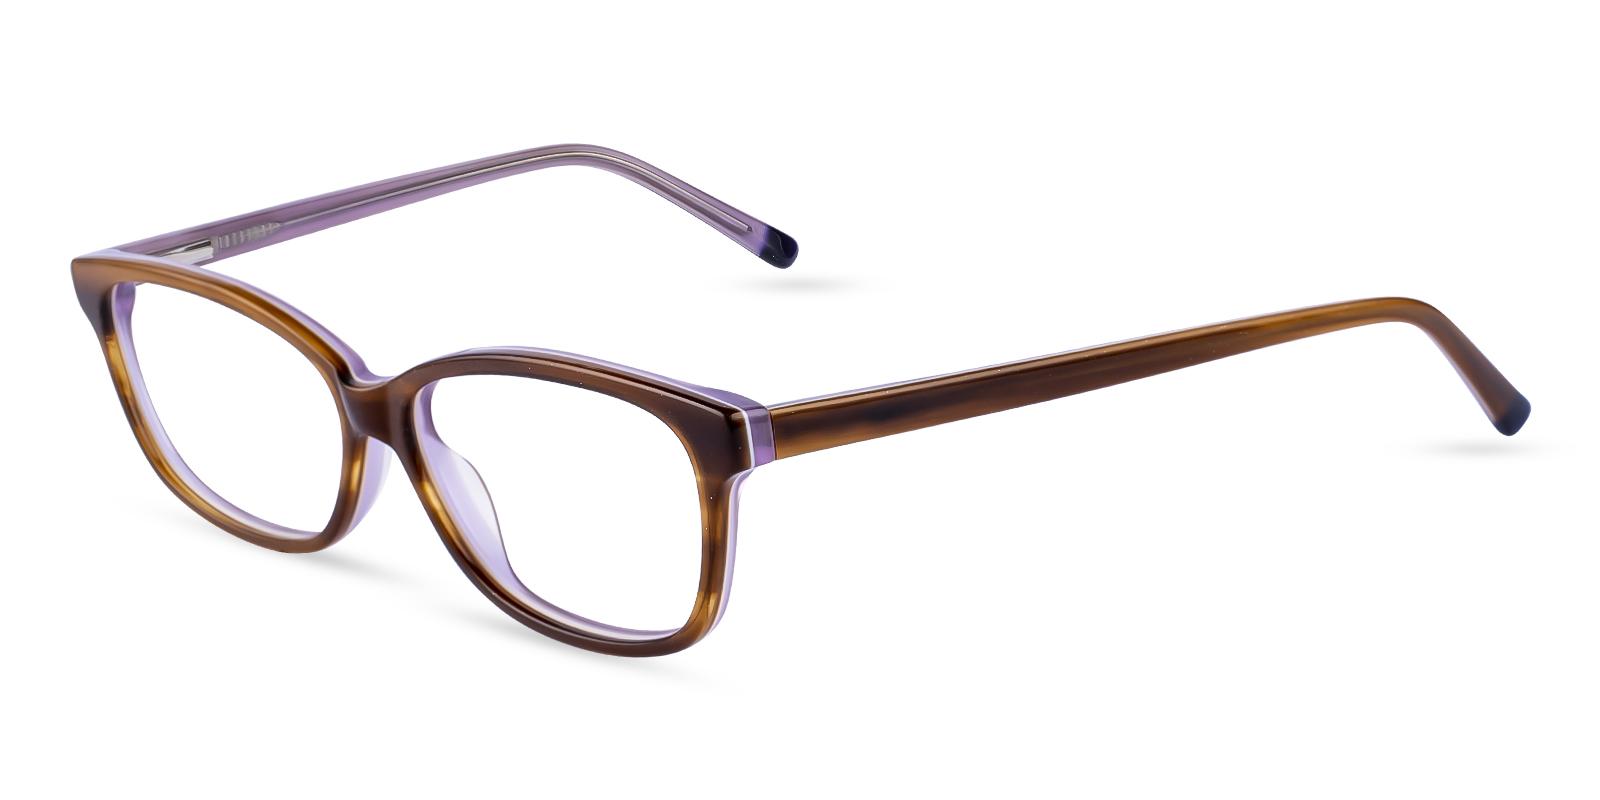 Levant Brown Acetate Eyeglasses , SpringHinges , UniversalBridgeFit Frames from ABBE Glasses